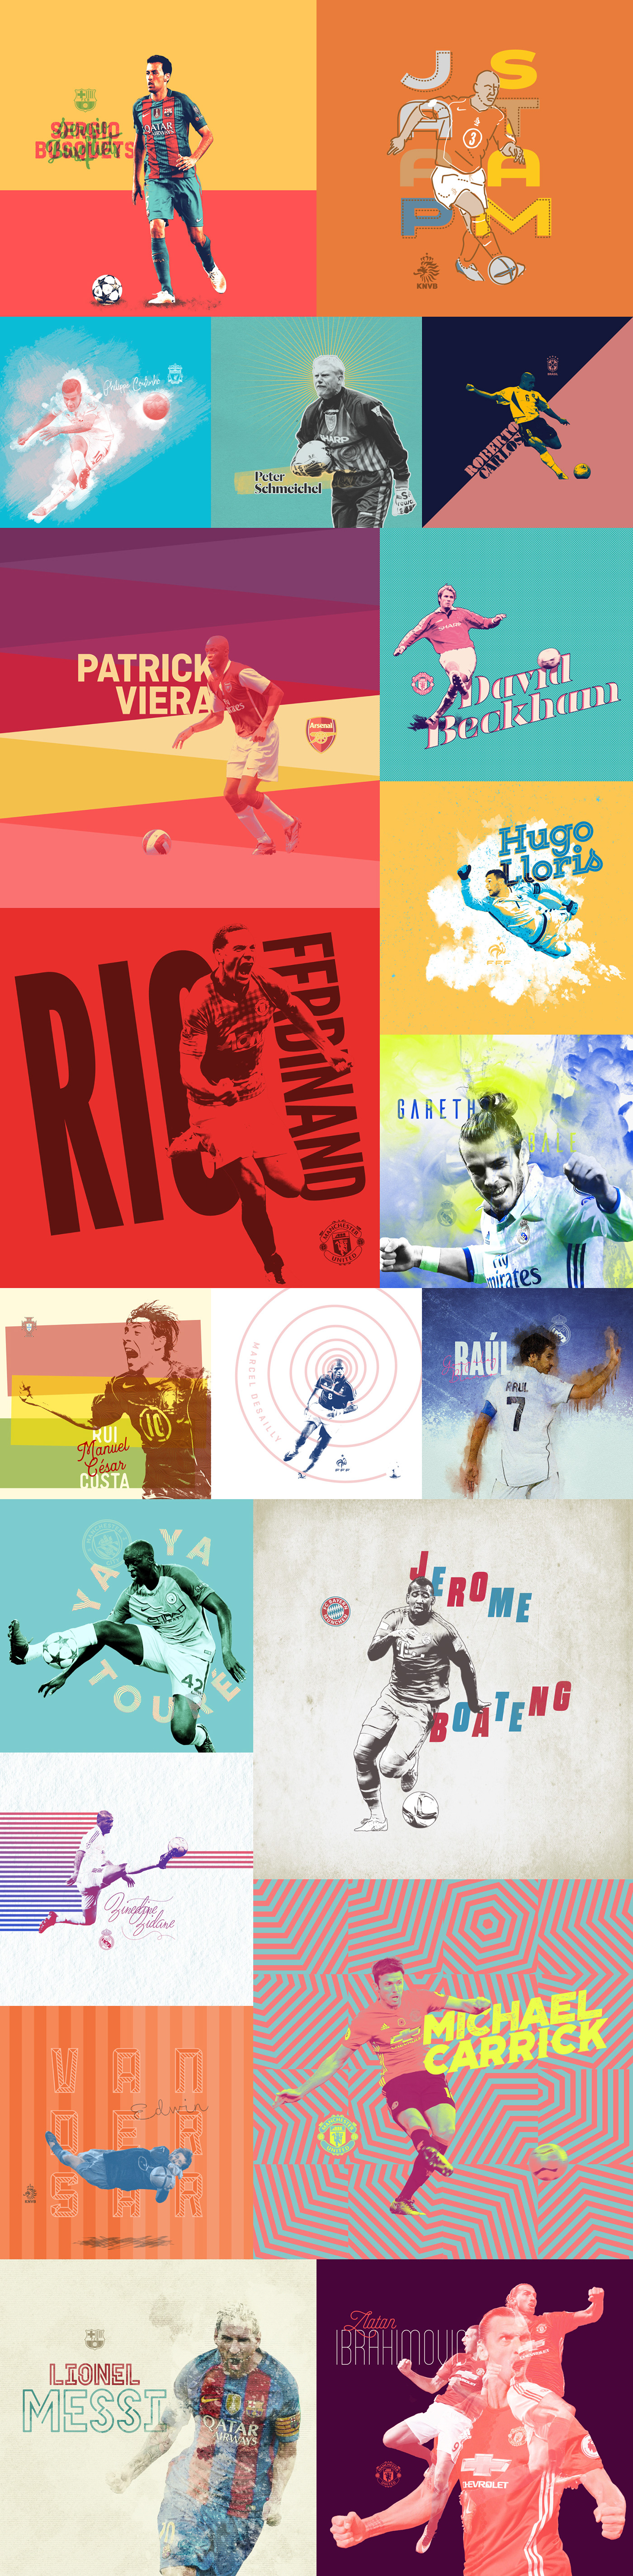 football soccer graphic barcelona ILLUSTRATION  Manchester United madrid messi ibrahimovic beckham